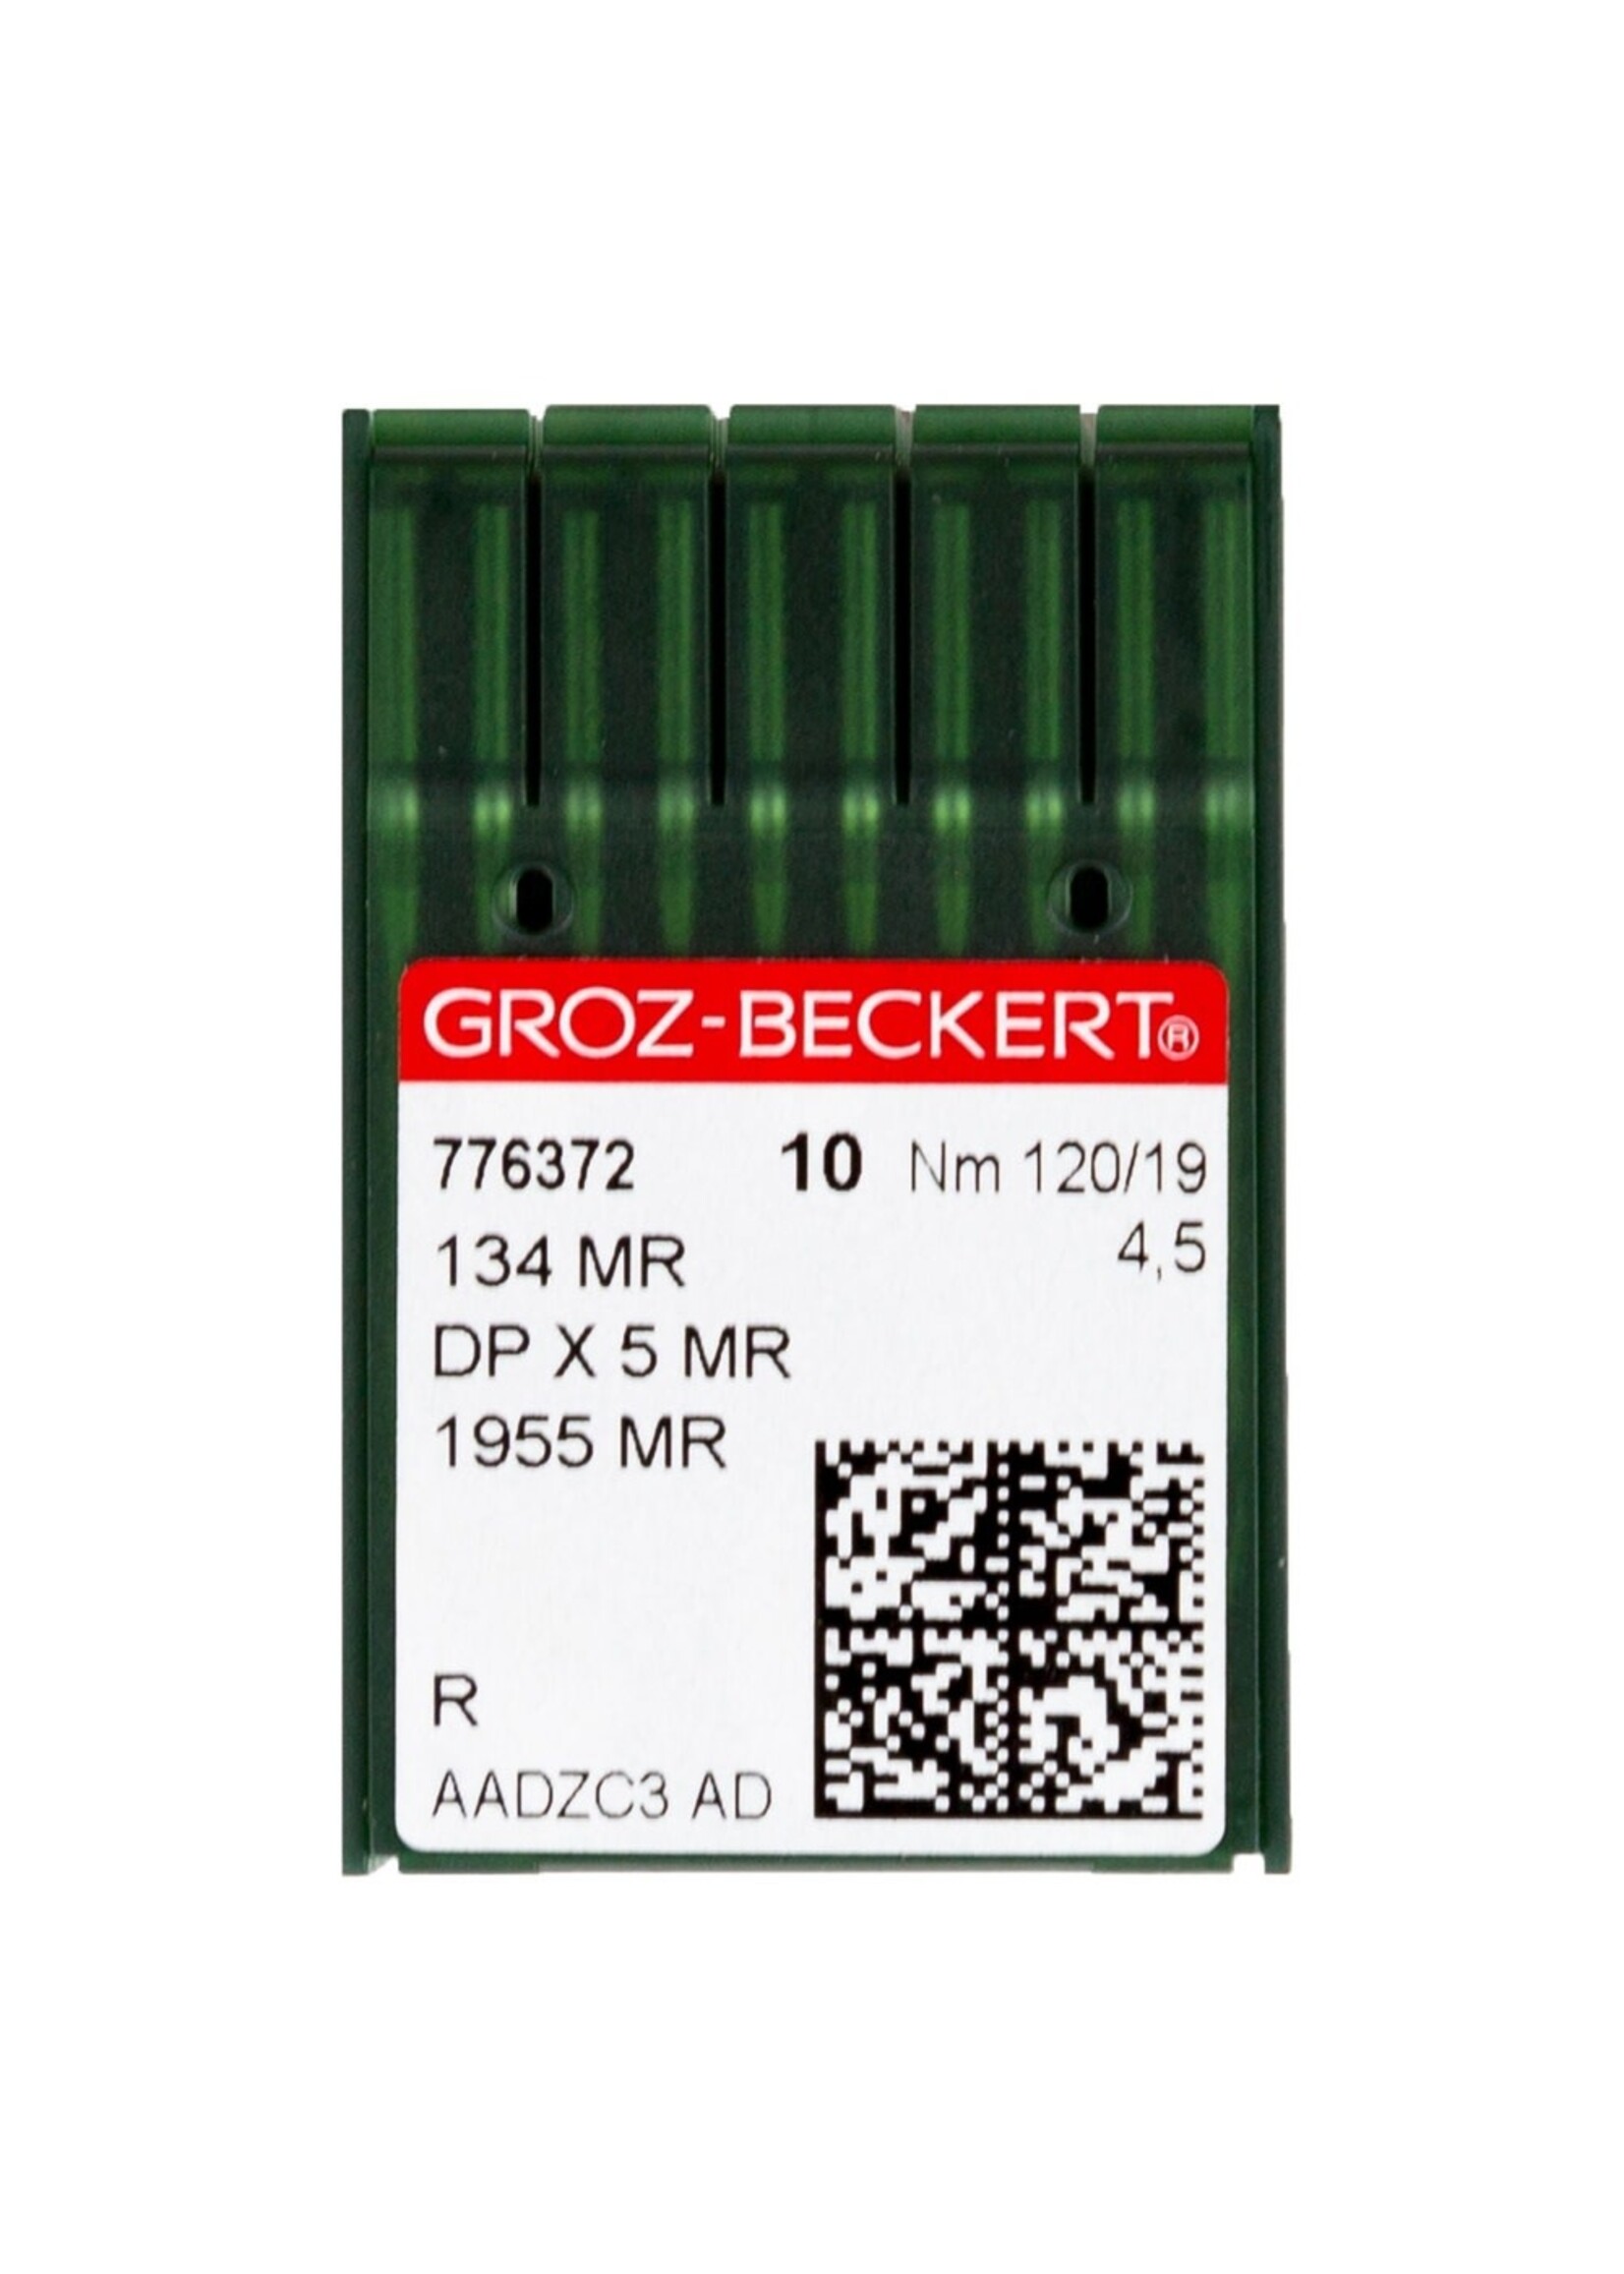 Groz-Beckert Needle MR 4.5 Sharp Set of 10